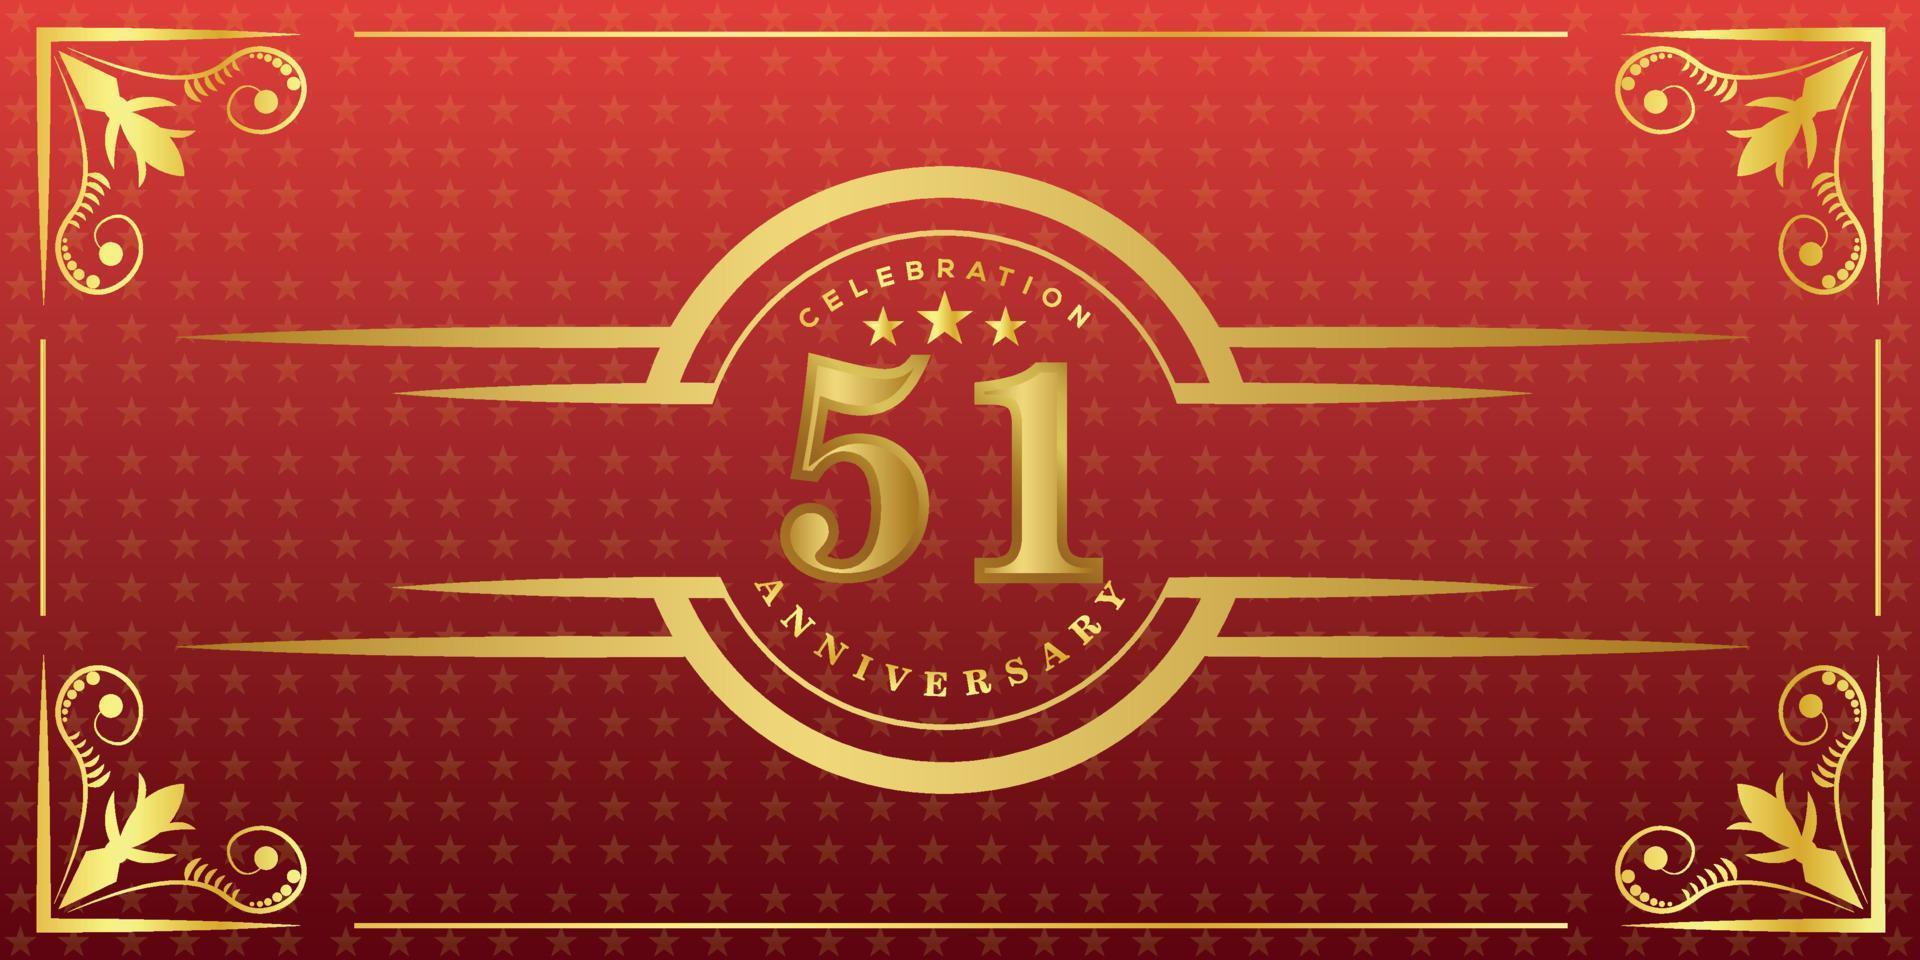 51ste verjaardag logo met gouden ring, confetti en goud grens geïsoleerd Aan elegant rood achtergrond, fonkeling, vector ontwerp voor groet kaart en uitnodiging kaart